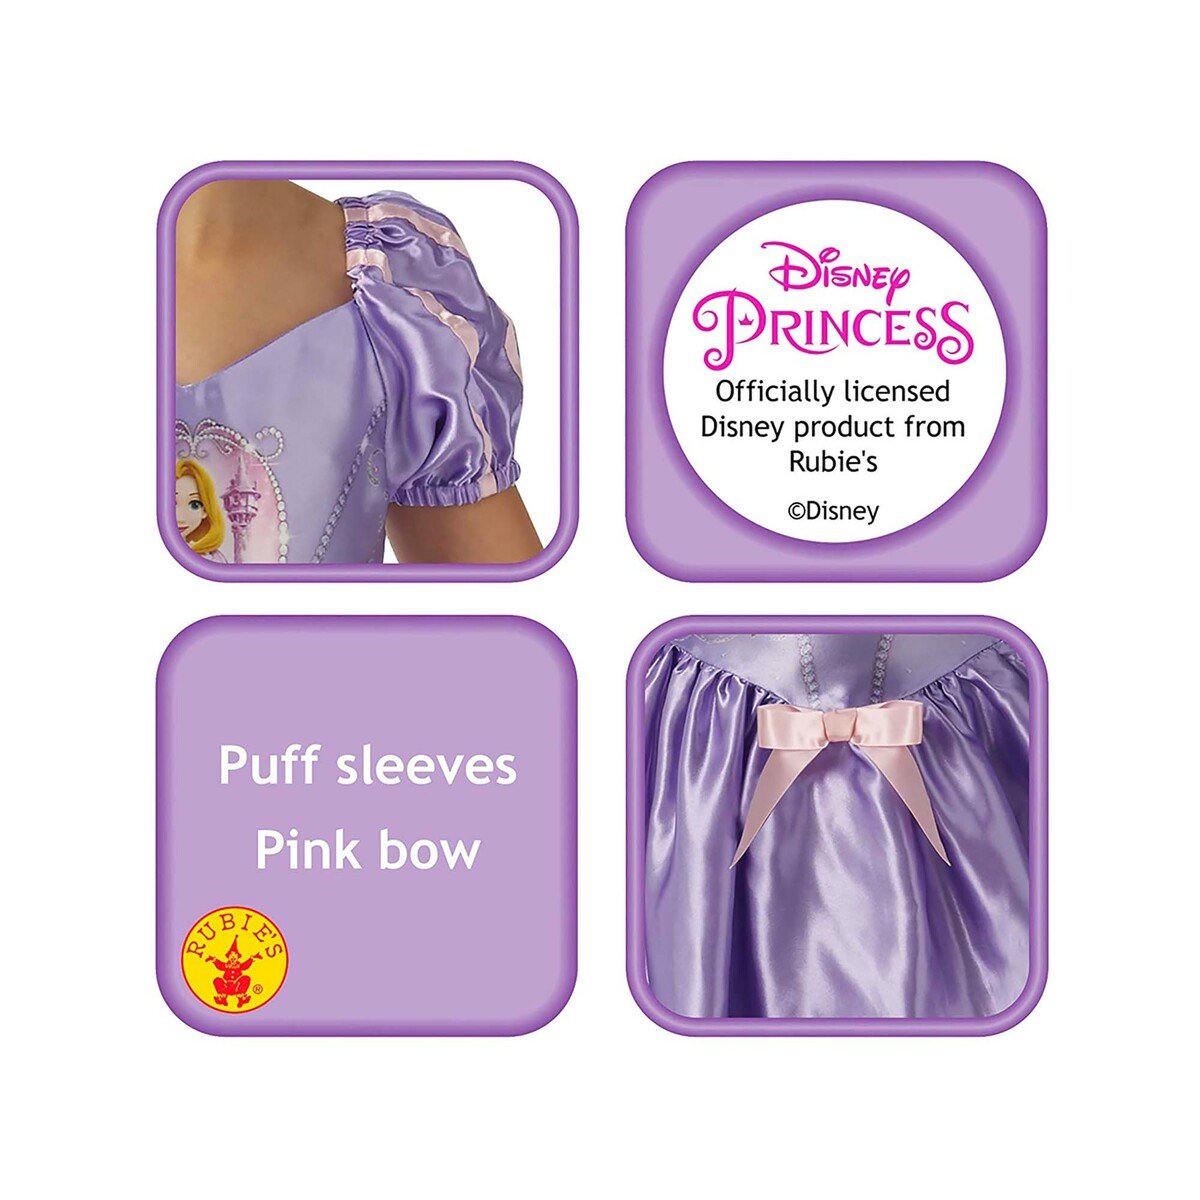 Disney Princess Rapunzel Costume 620539-M